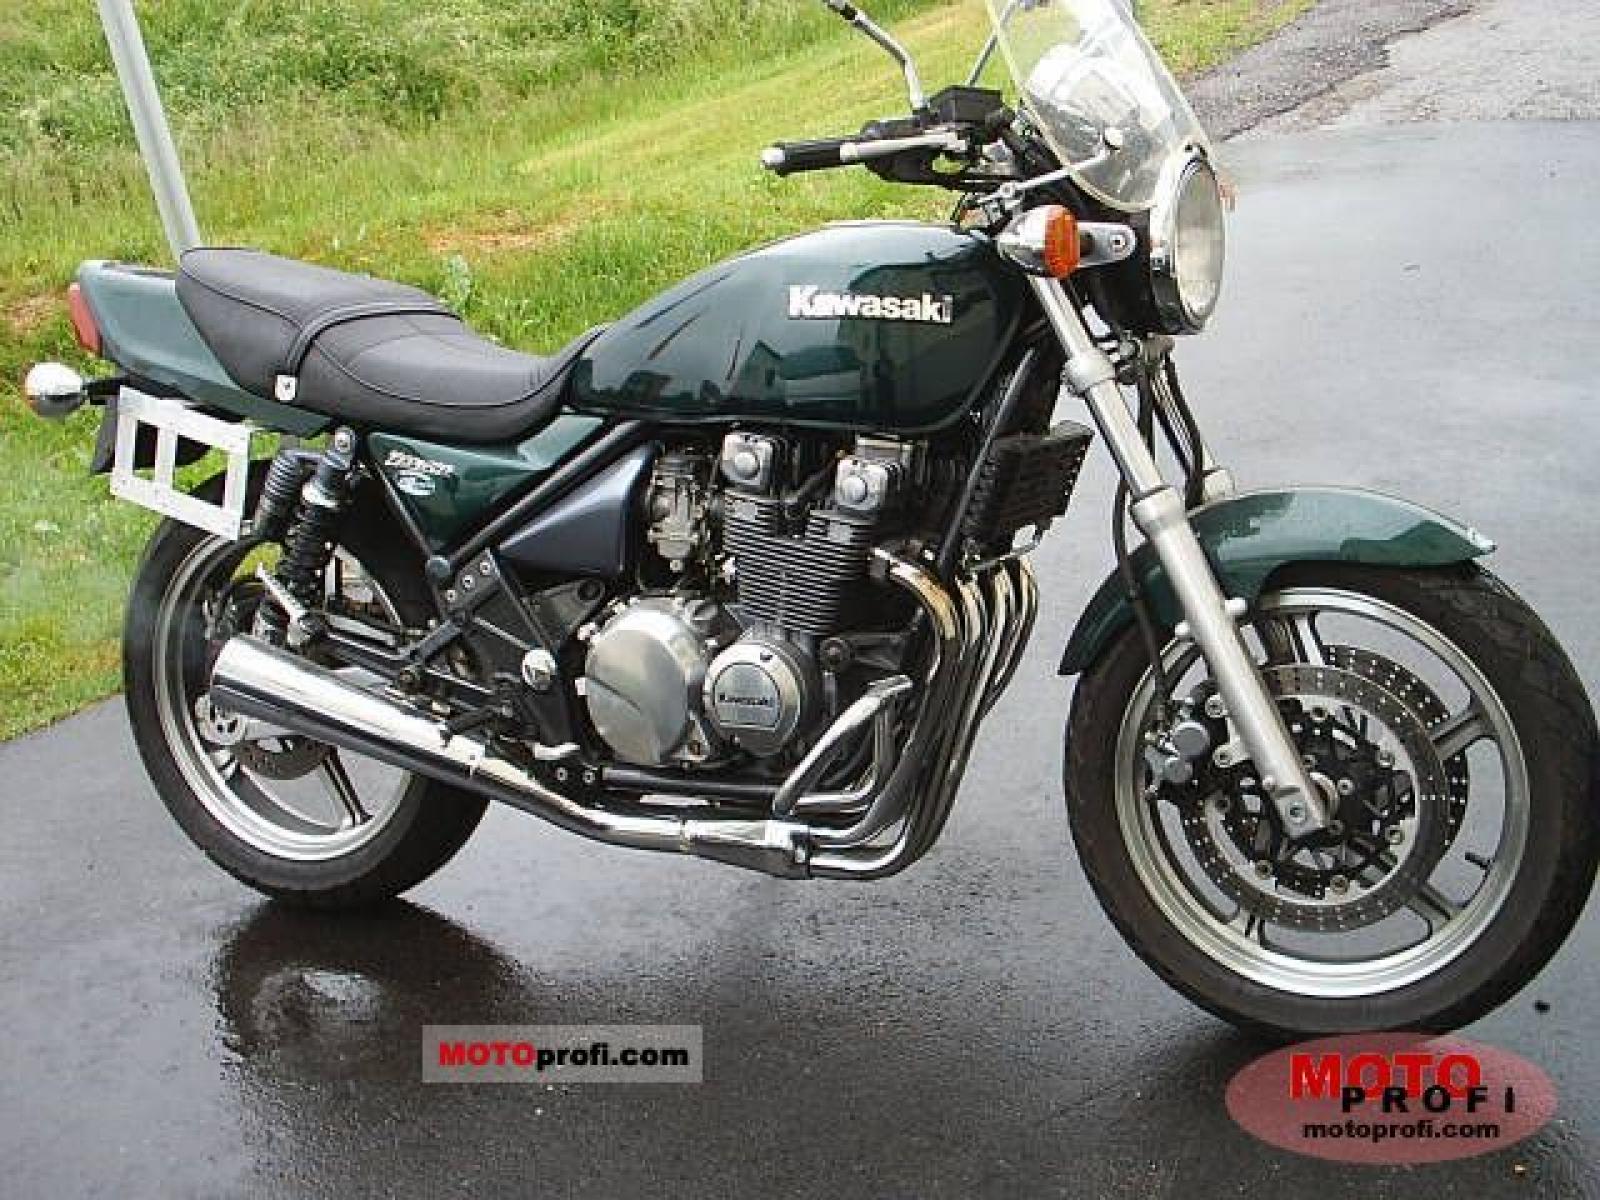 Kawasaki zephyr 550 (zr550b): review, history, specs